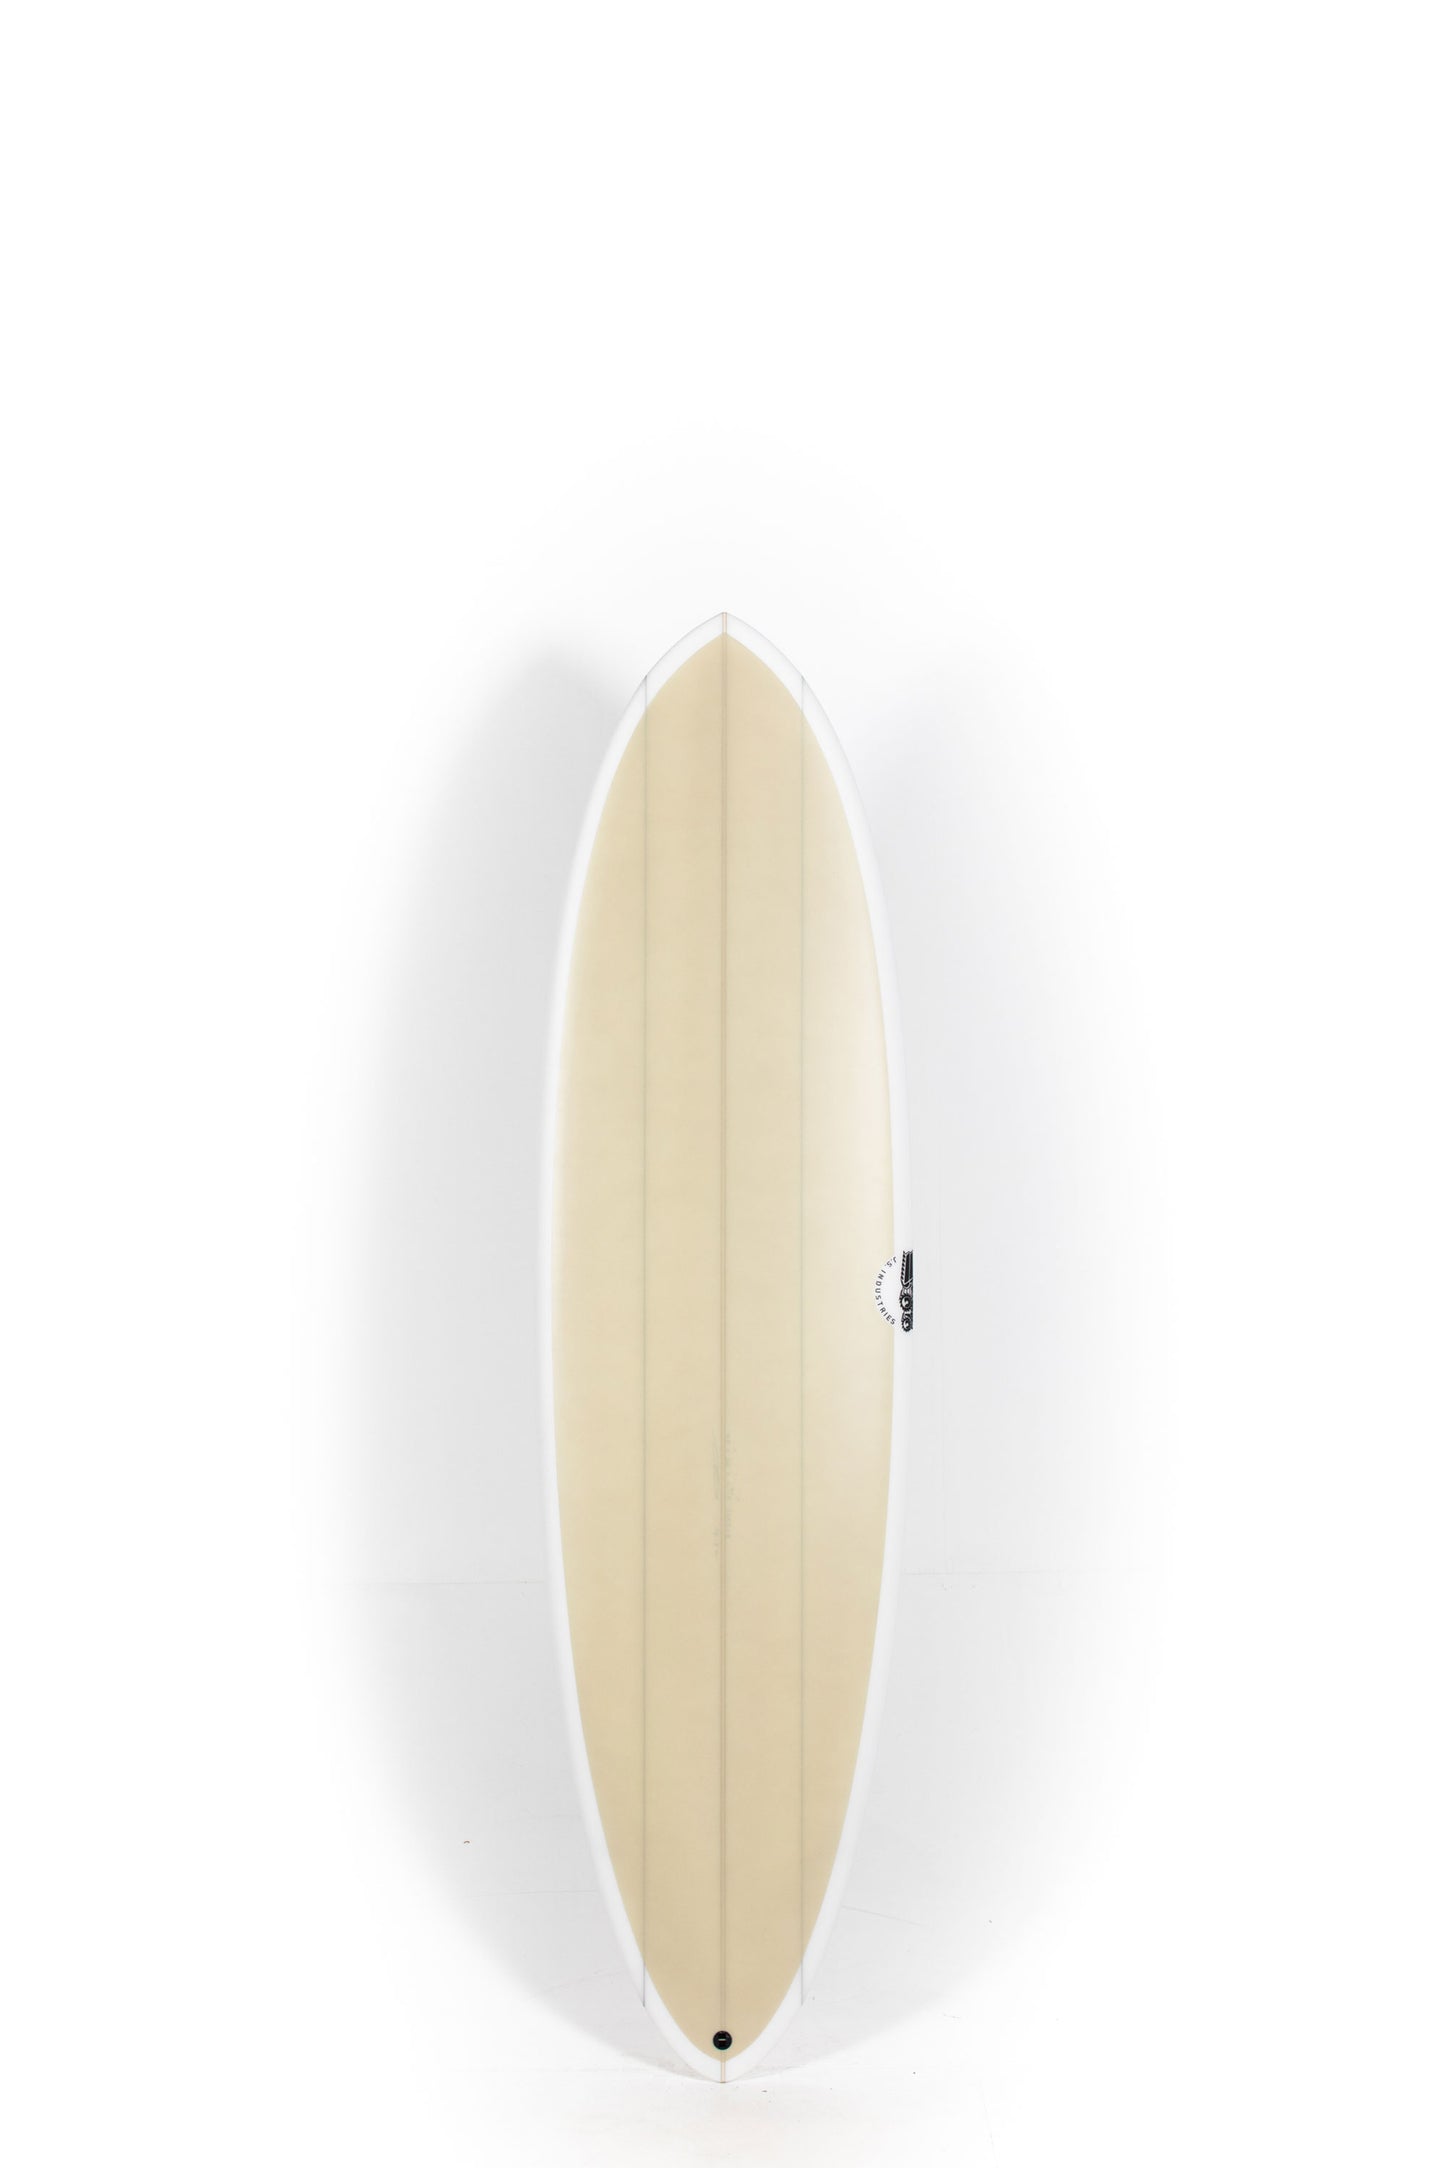 Pukas Surf Shop - JS Surfboards - BIG BARON - 6'4" x 20 x 2,56 x 34,3L. - BIGBARONTAN